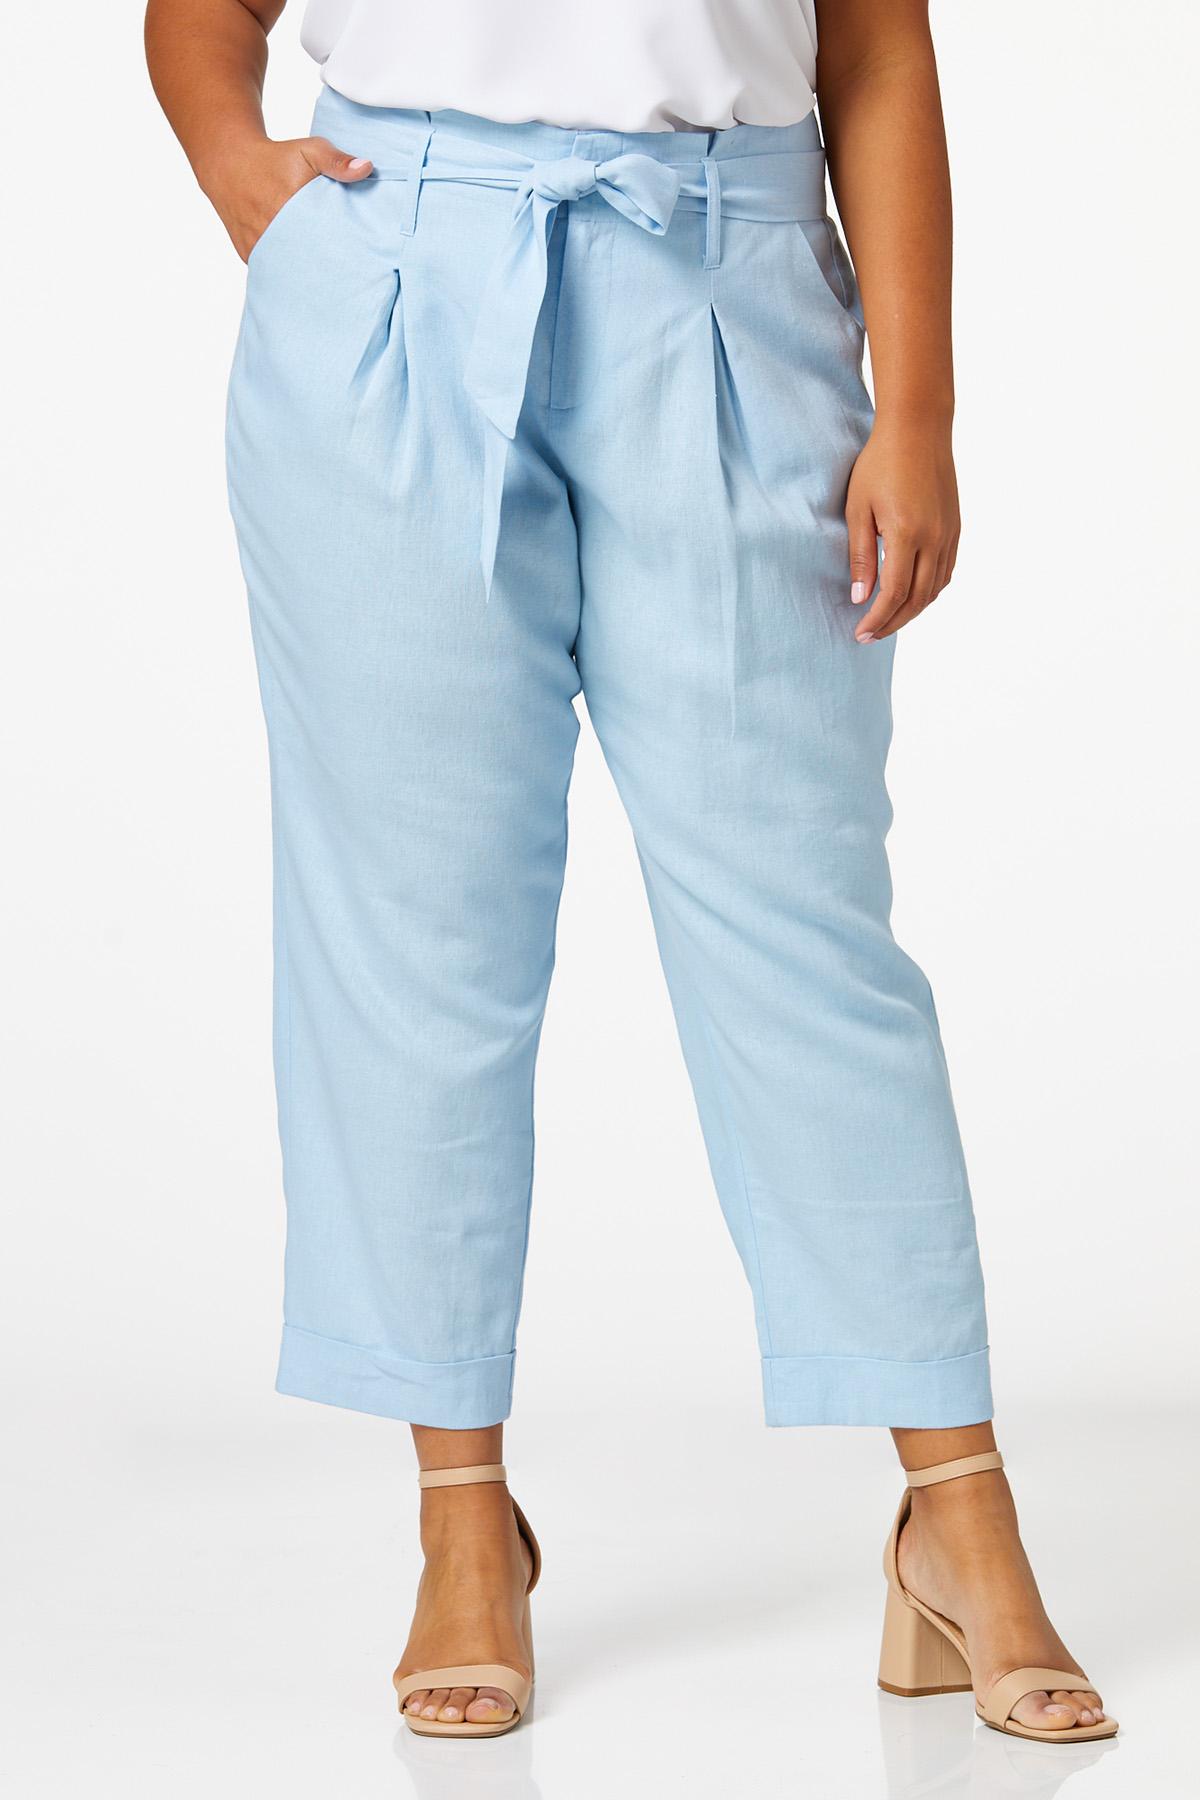 Cato Fashions  Cato Plus Size Sky Blue Linen Pants